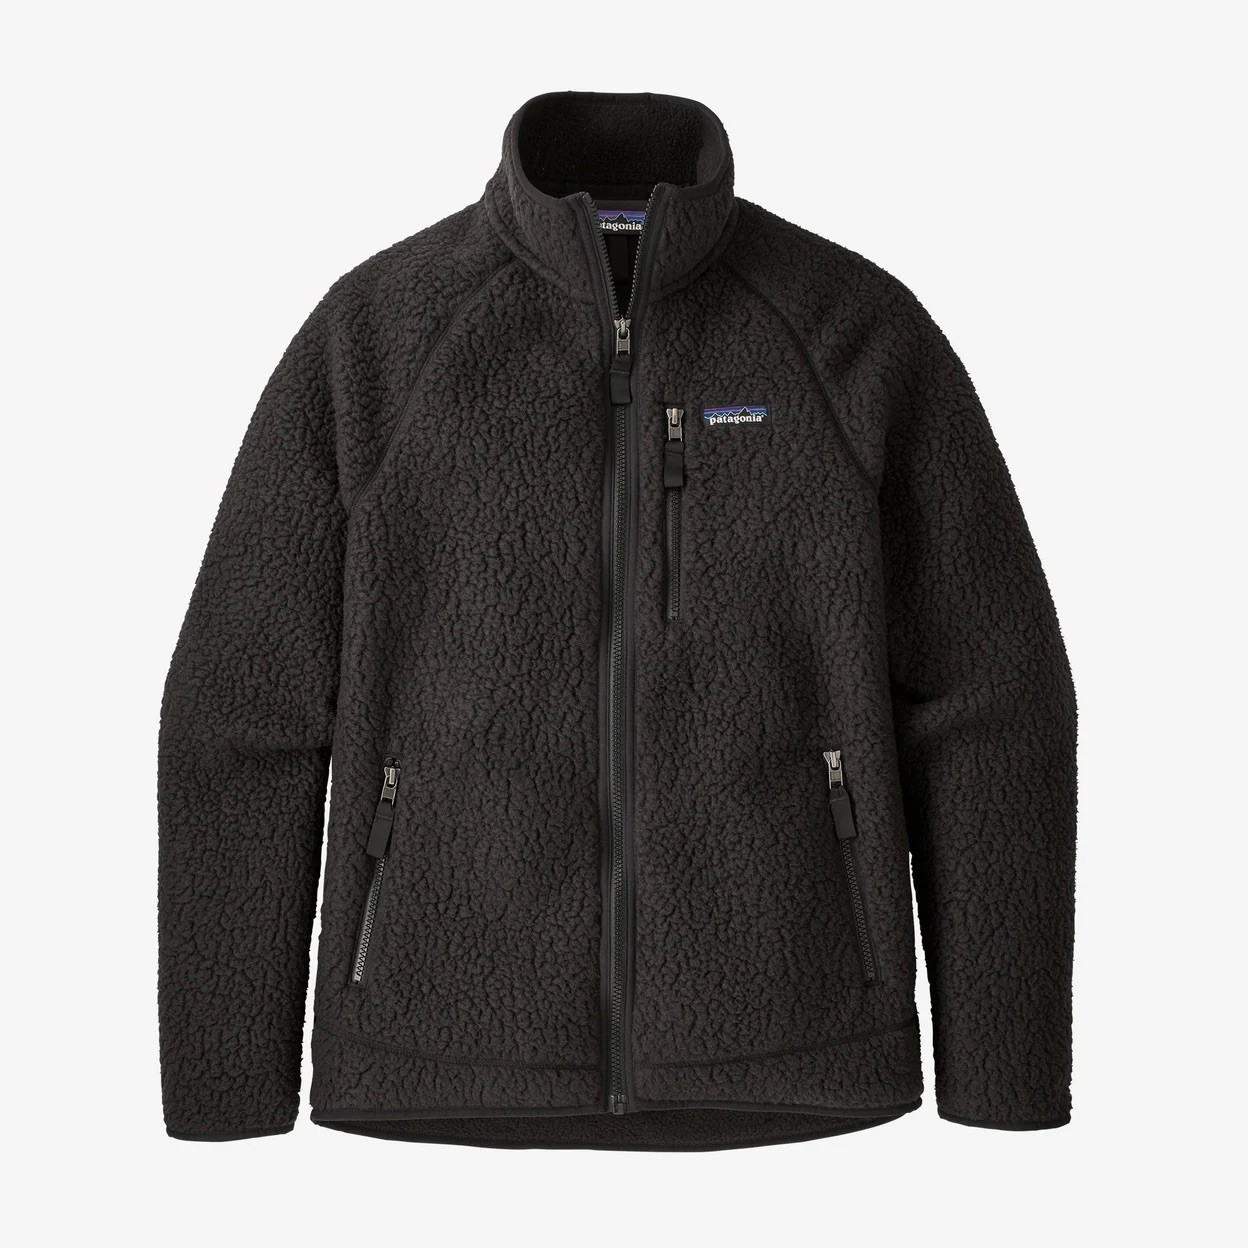 Patagonia Men's Retro Pile Fleece Jacket - Black - Extra Large